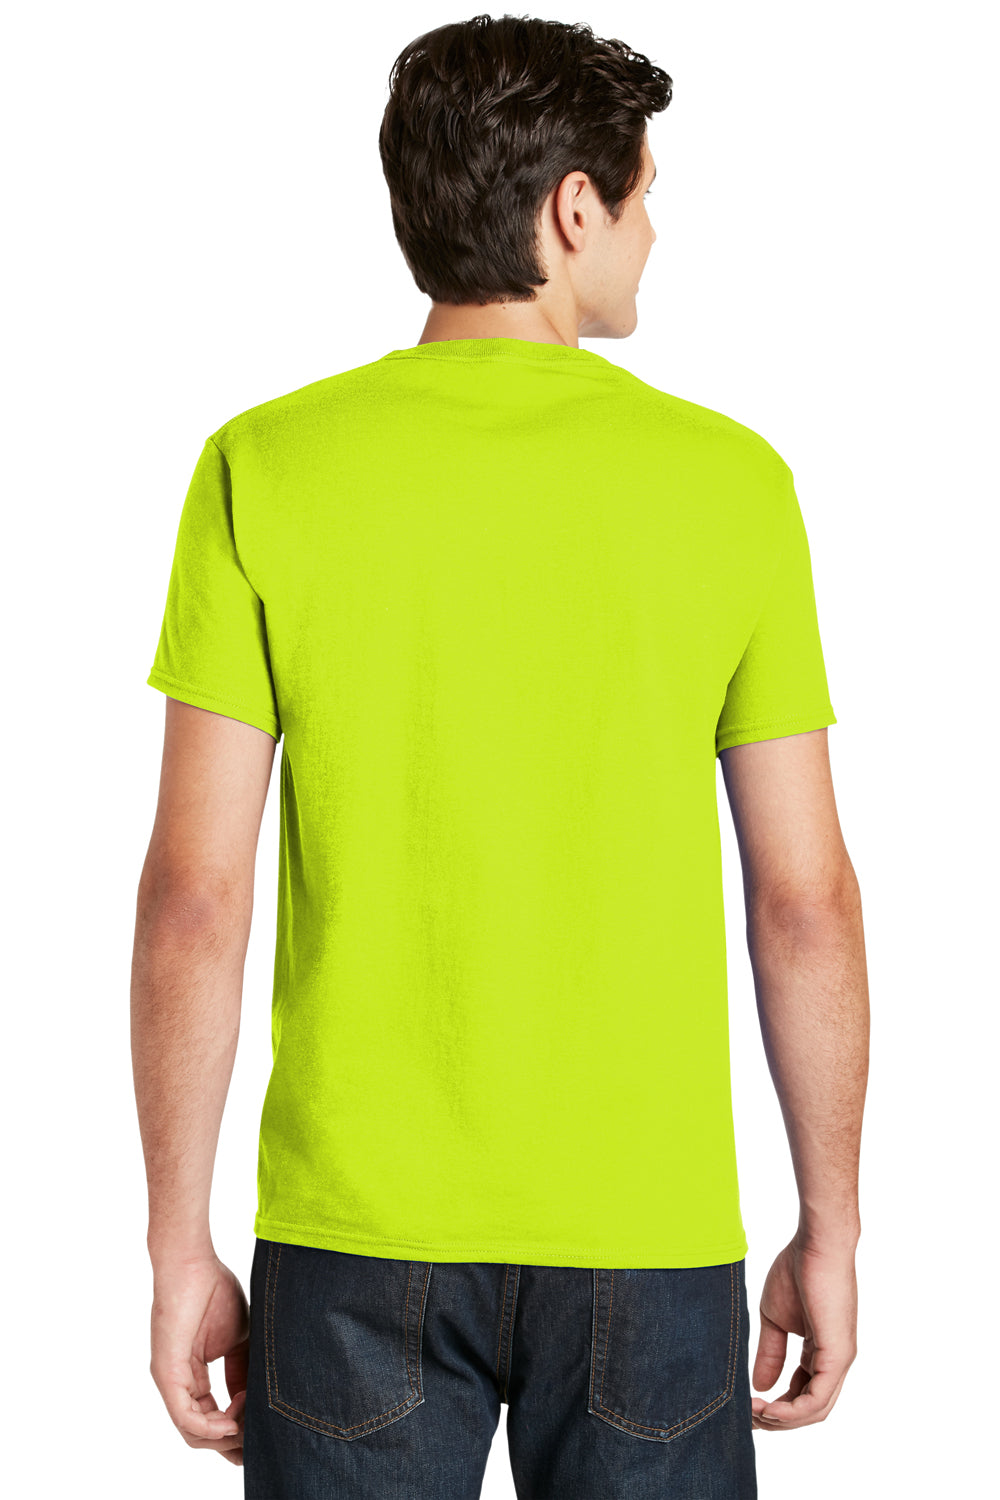 Hanes Mens ComfortSoft Short Sleeve Crewneck T-Shirt Safety Green Back